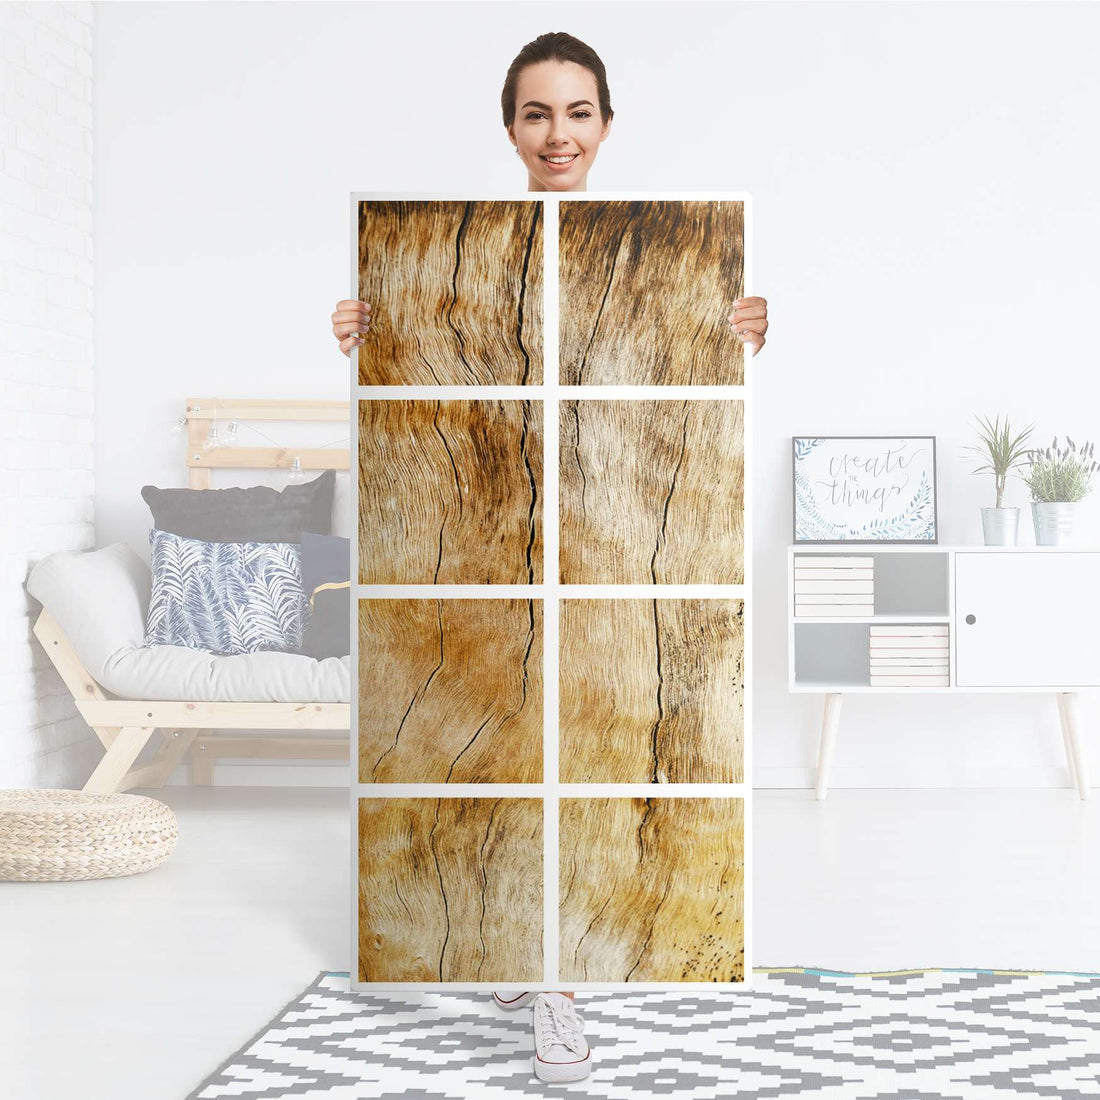 Folie für Möbel Unterholz - IKEA Kallax Regal 8 Türen - Folie